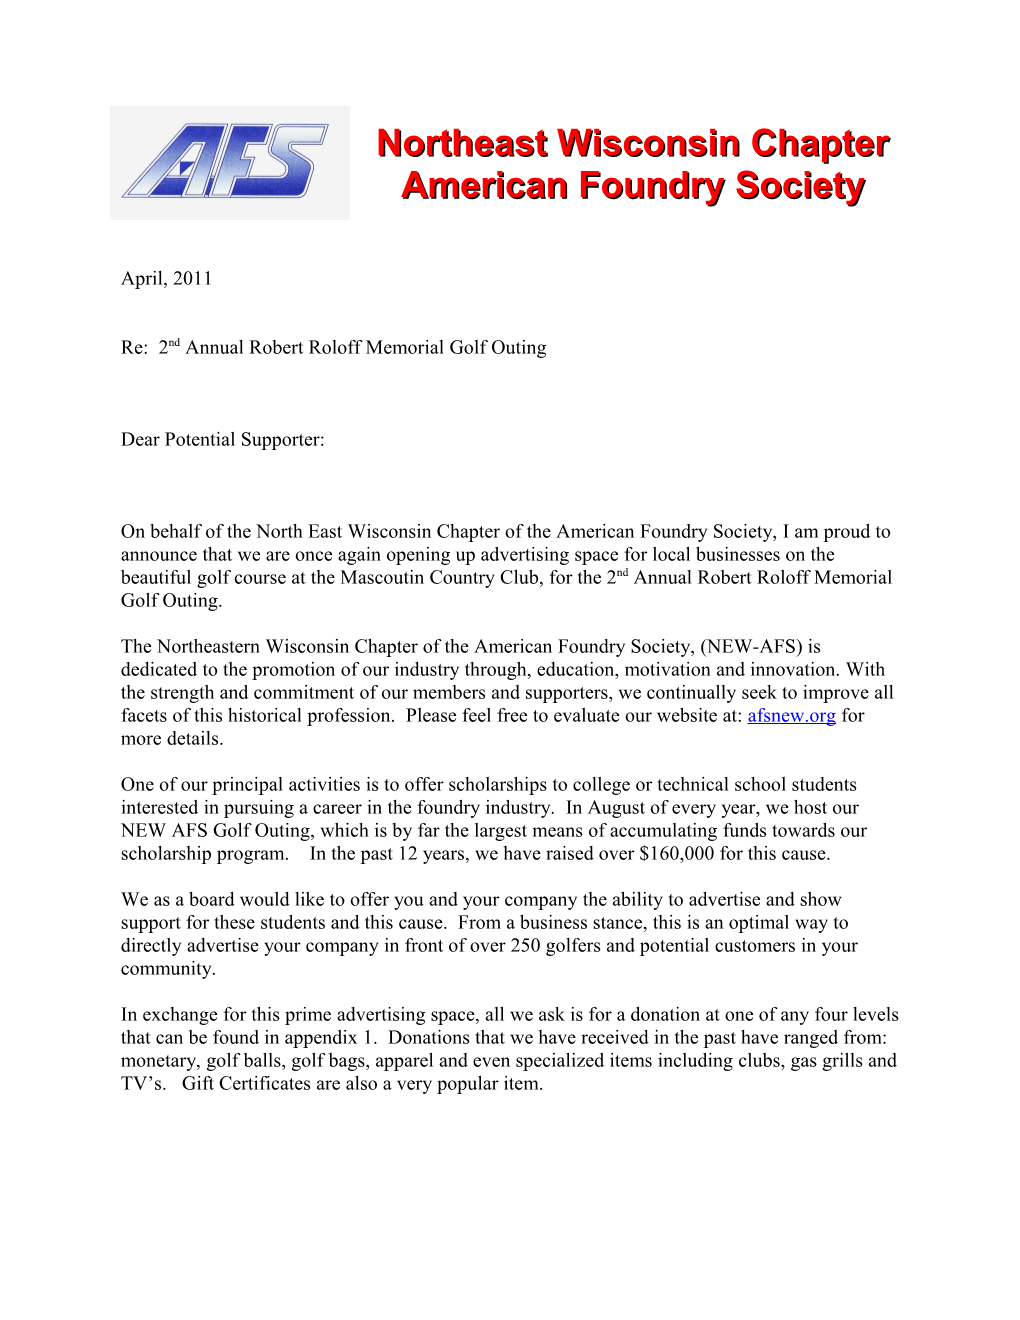 American Foundry Society